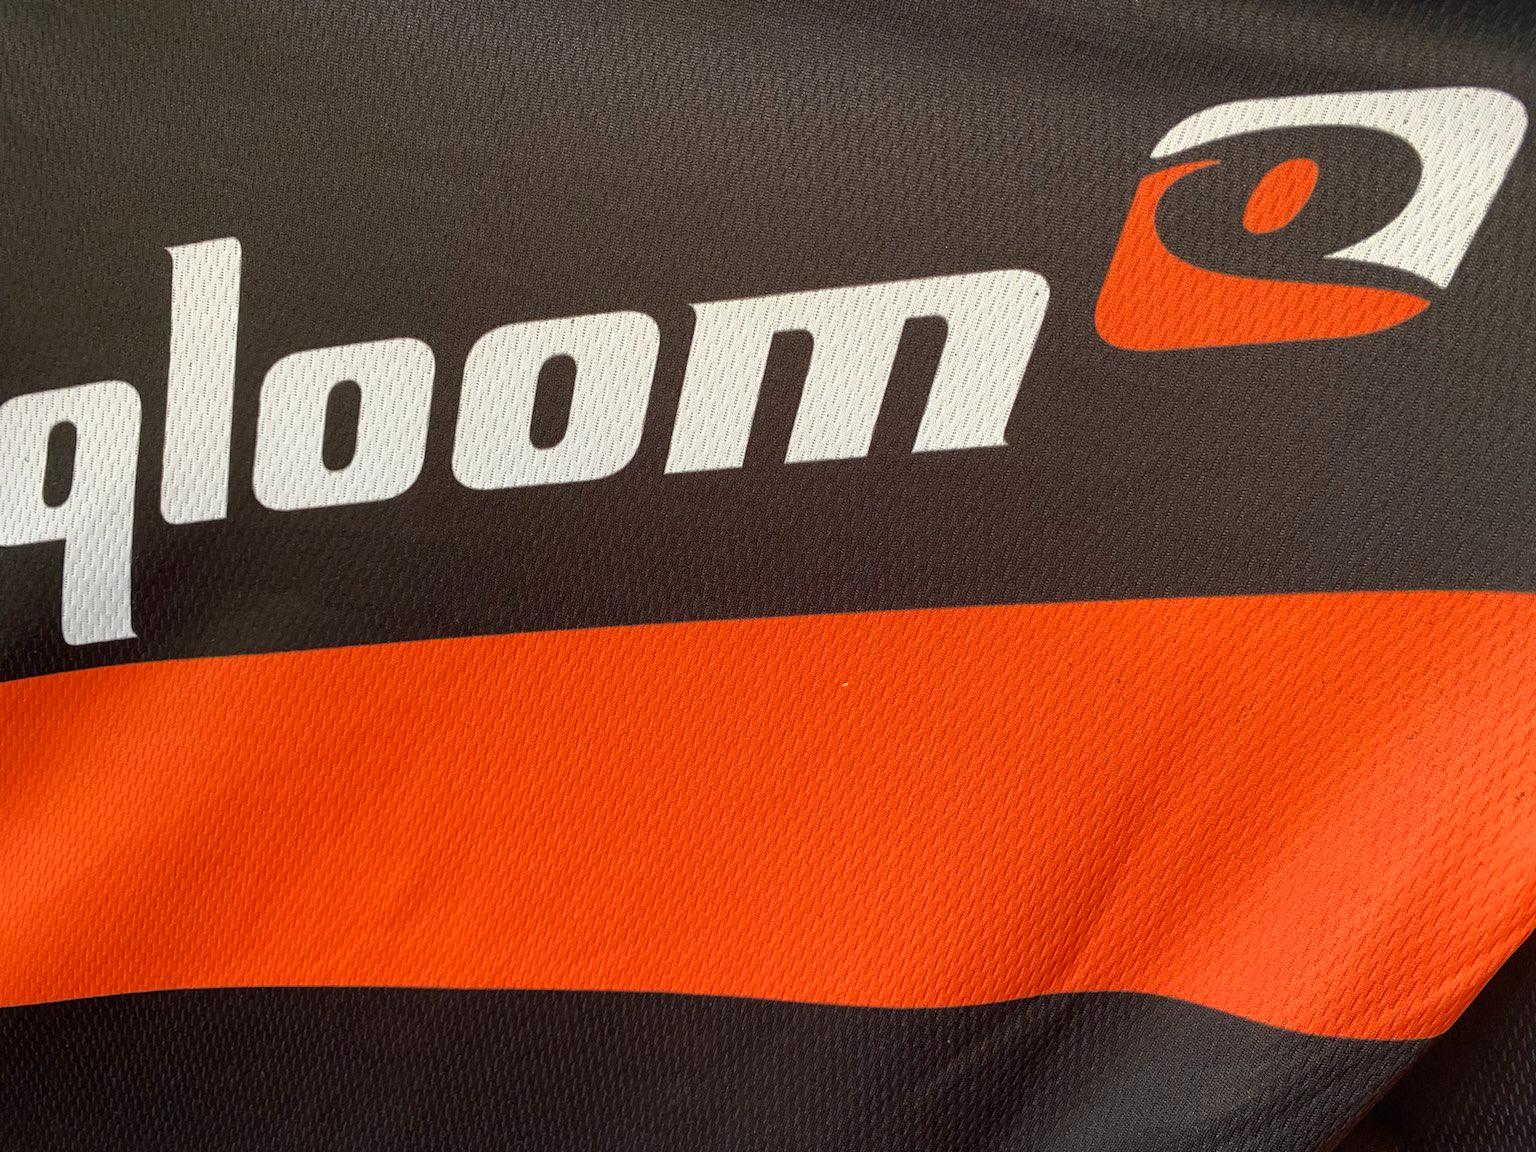 T-shirt QLOOM noir frazer team taille L logo